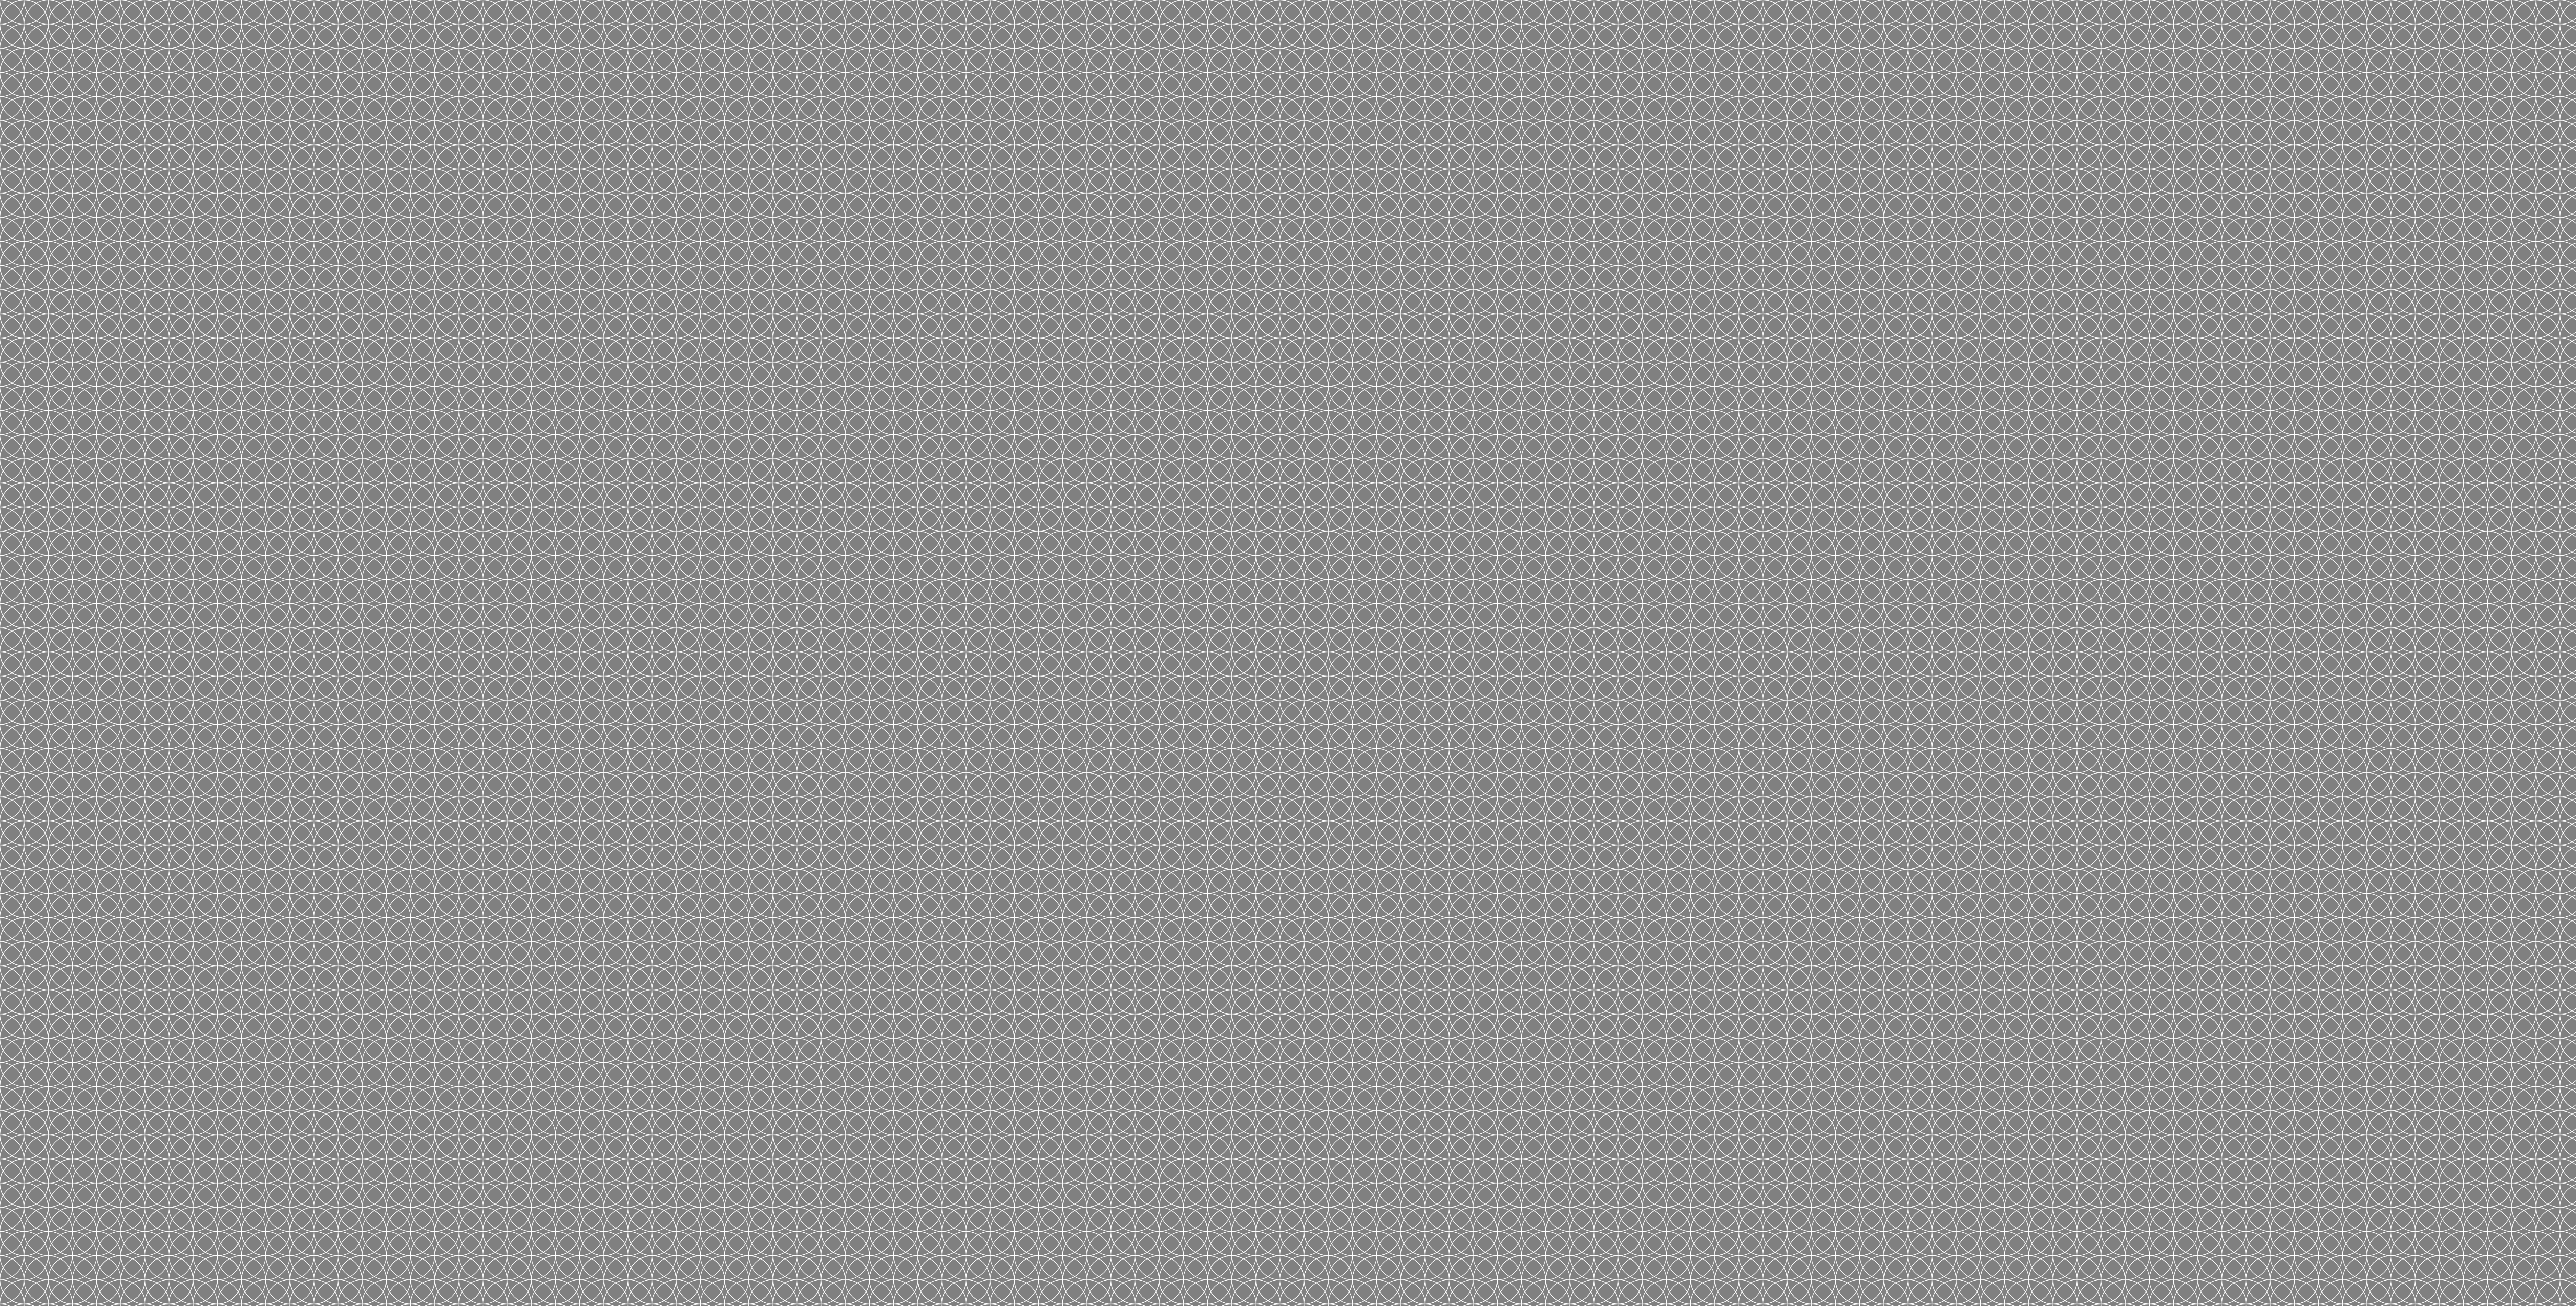 General 8533x4327 digital art minimalism simple background tiles